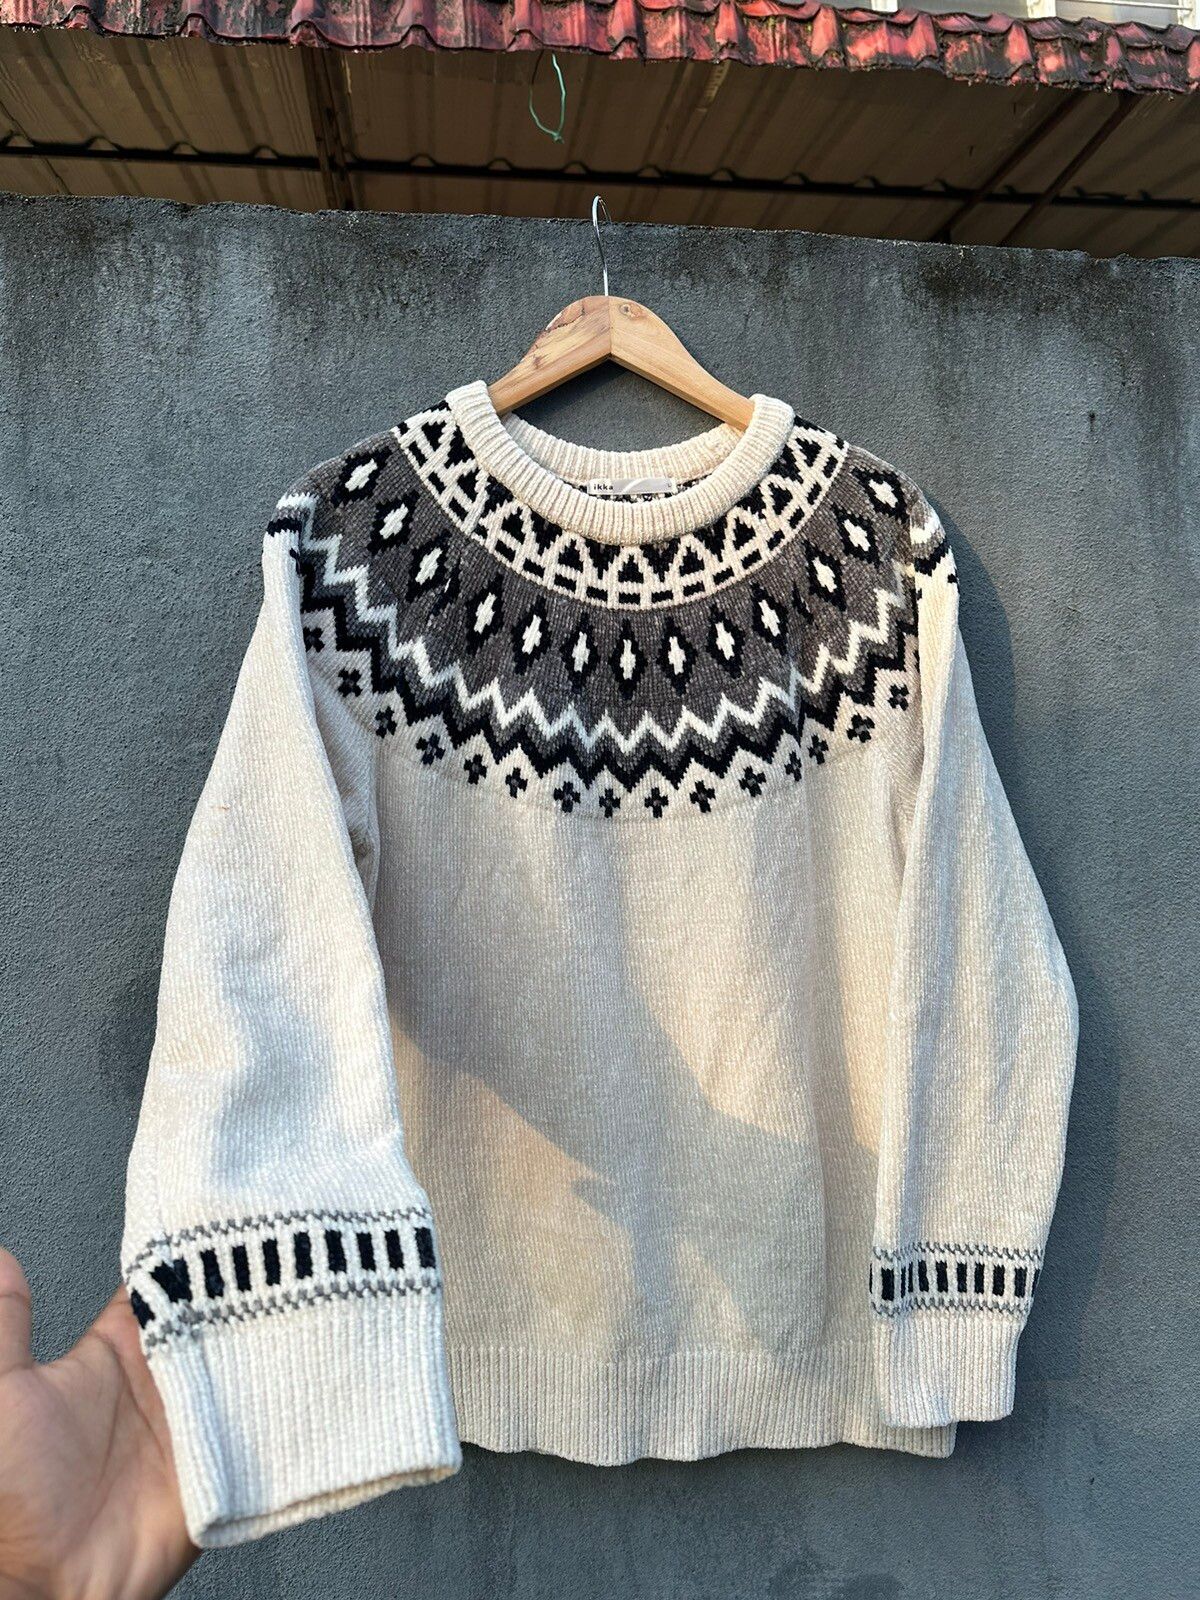 Japanese Brand Ikka Knitted Sweatshirt Size US M / EU 48-50 / 2 - 6 Thumbnail